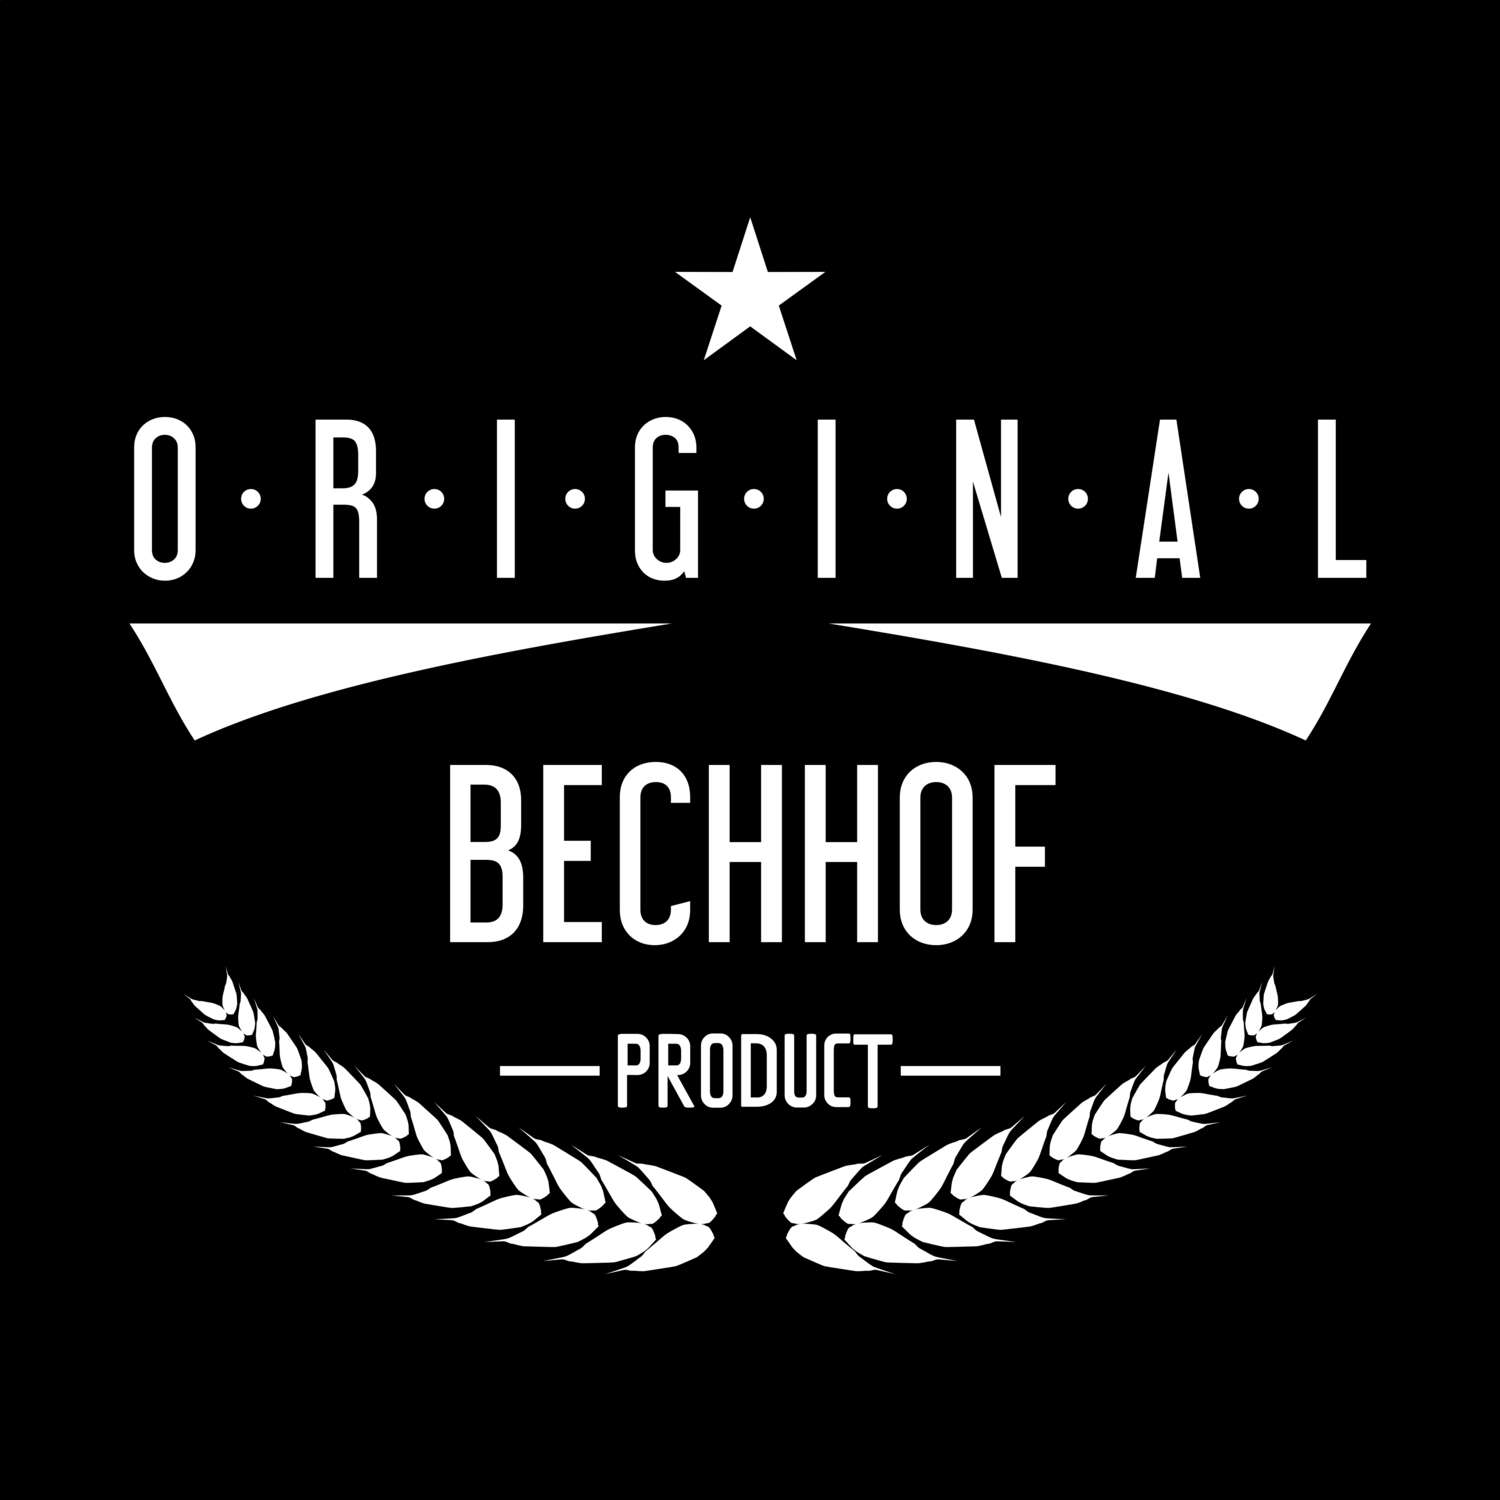 Bechhof T-Shirt »Original Product«